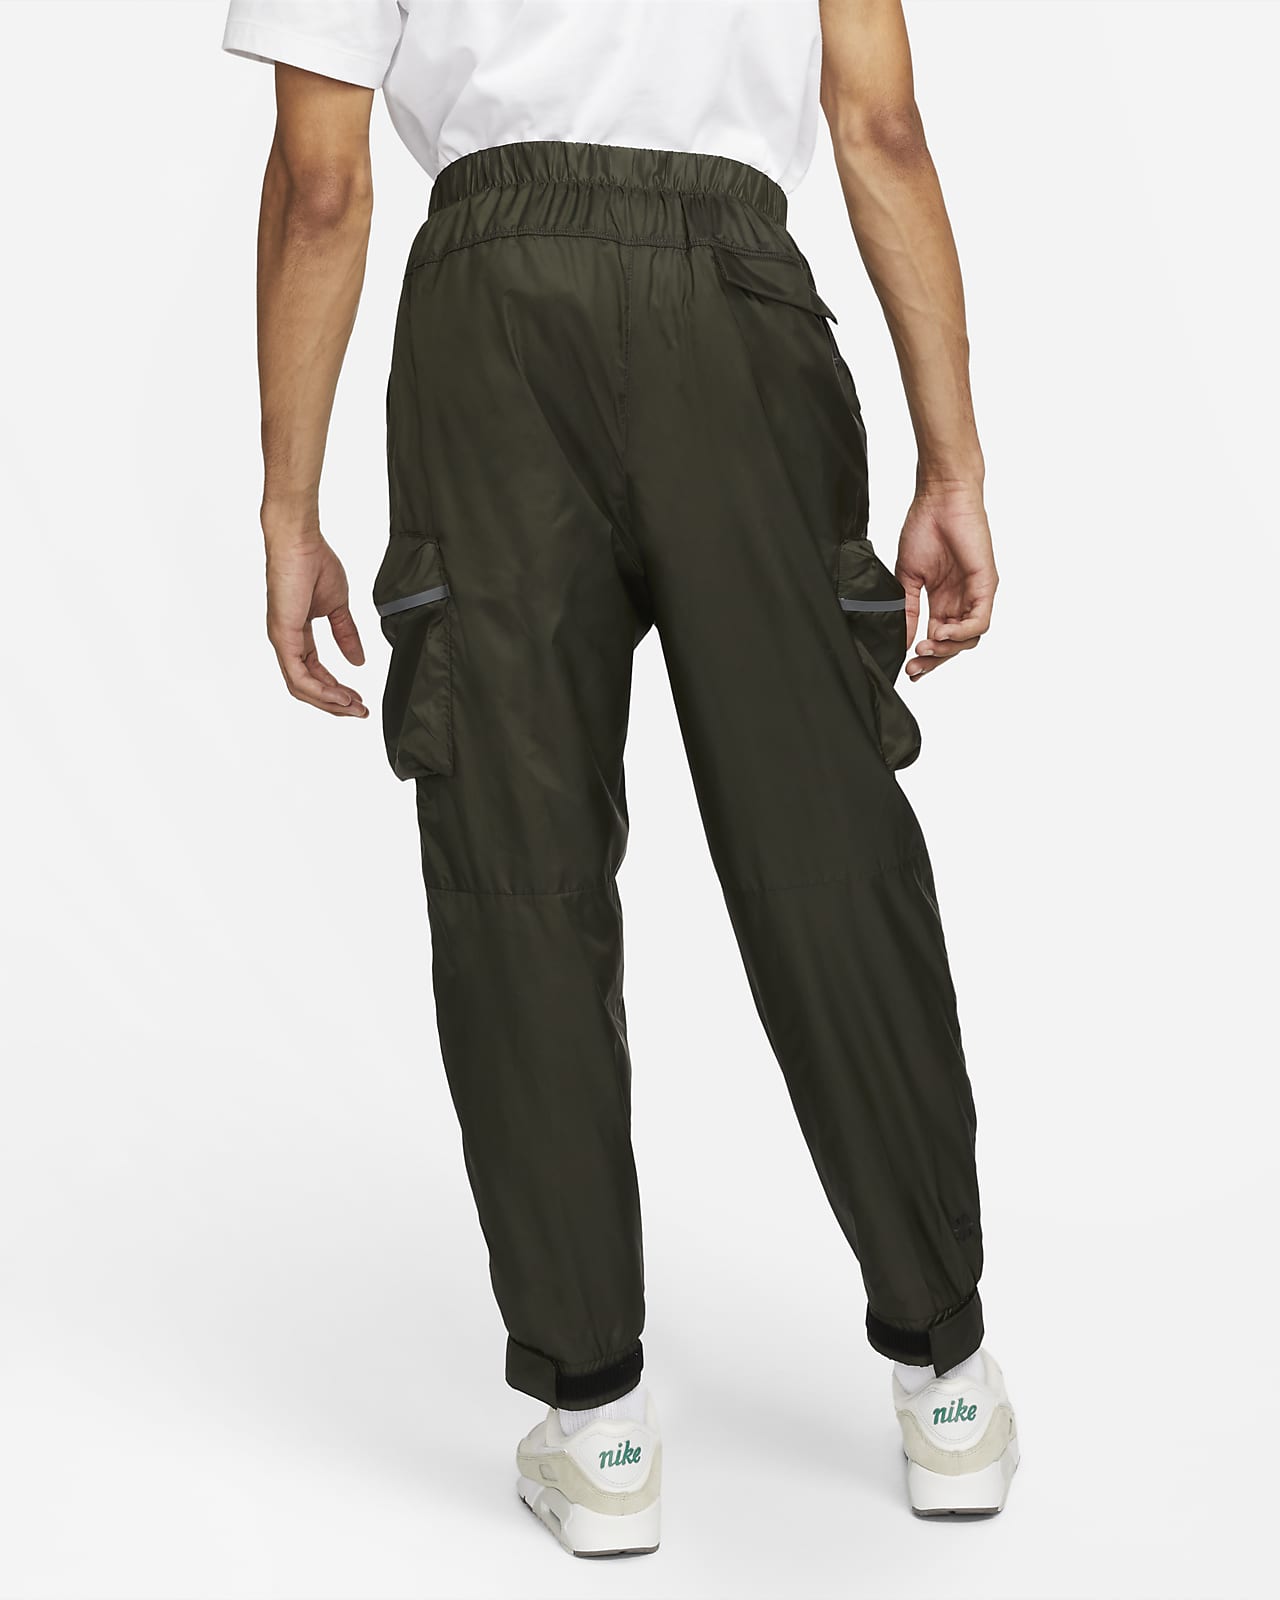 Nike Sportswear M NSW REPEAT FLC BB  Cargo trousers  iron  greywhitemottled dark grey  Zalandocouk